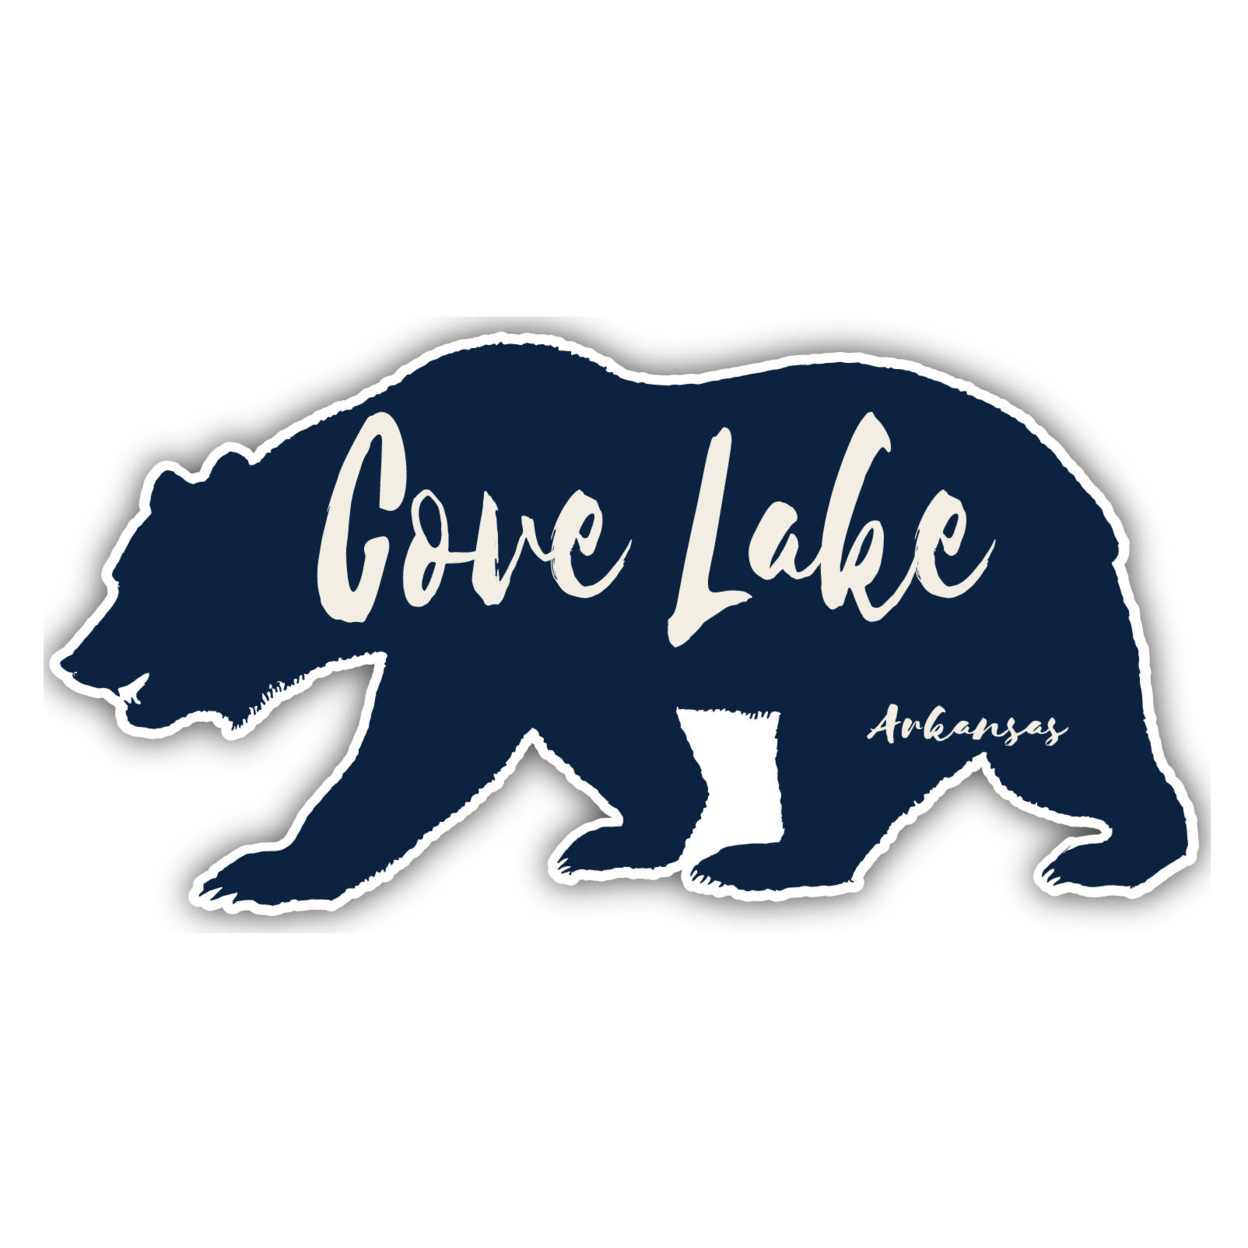 Cove Lake Arkansas Souvenir Decorative Stickers (Choose Theme And Size) - Single Unit, 6-Inch, Bear